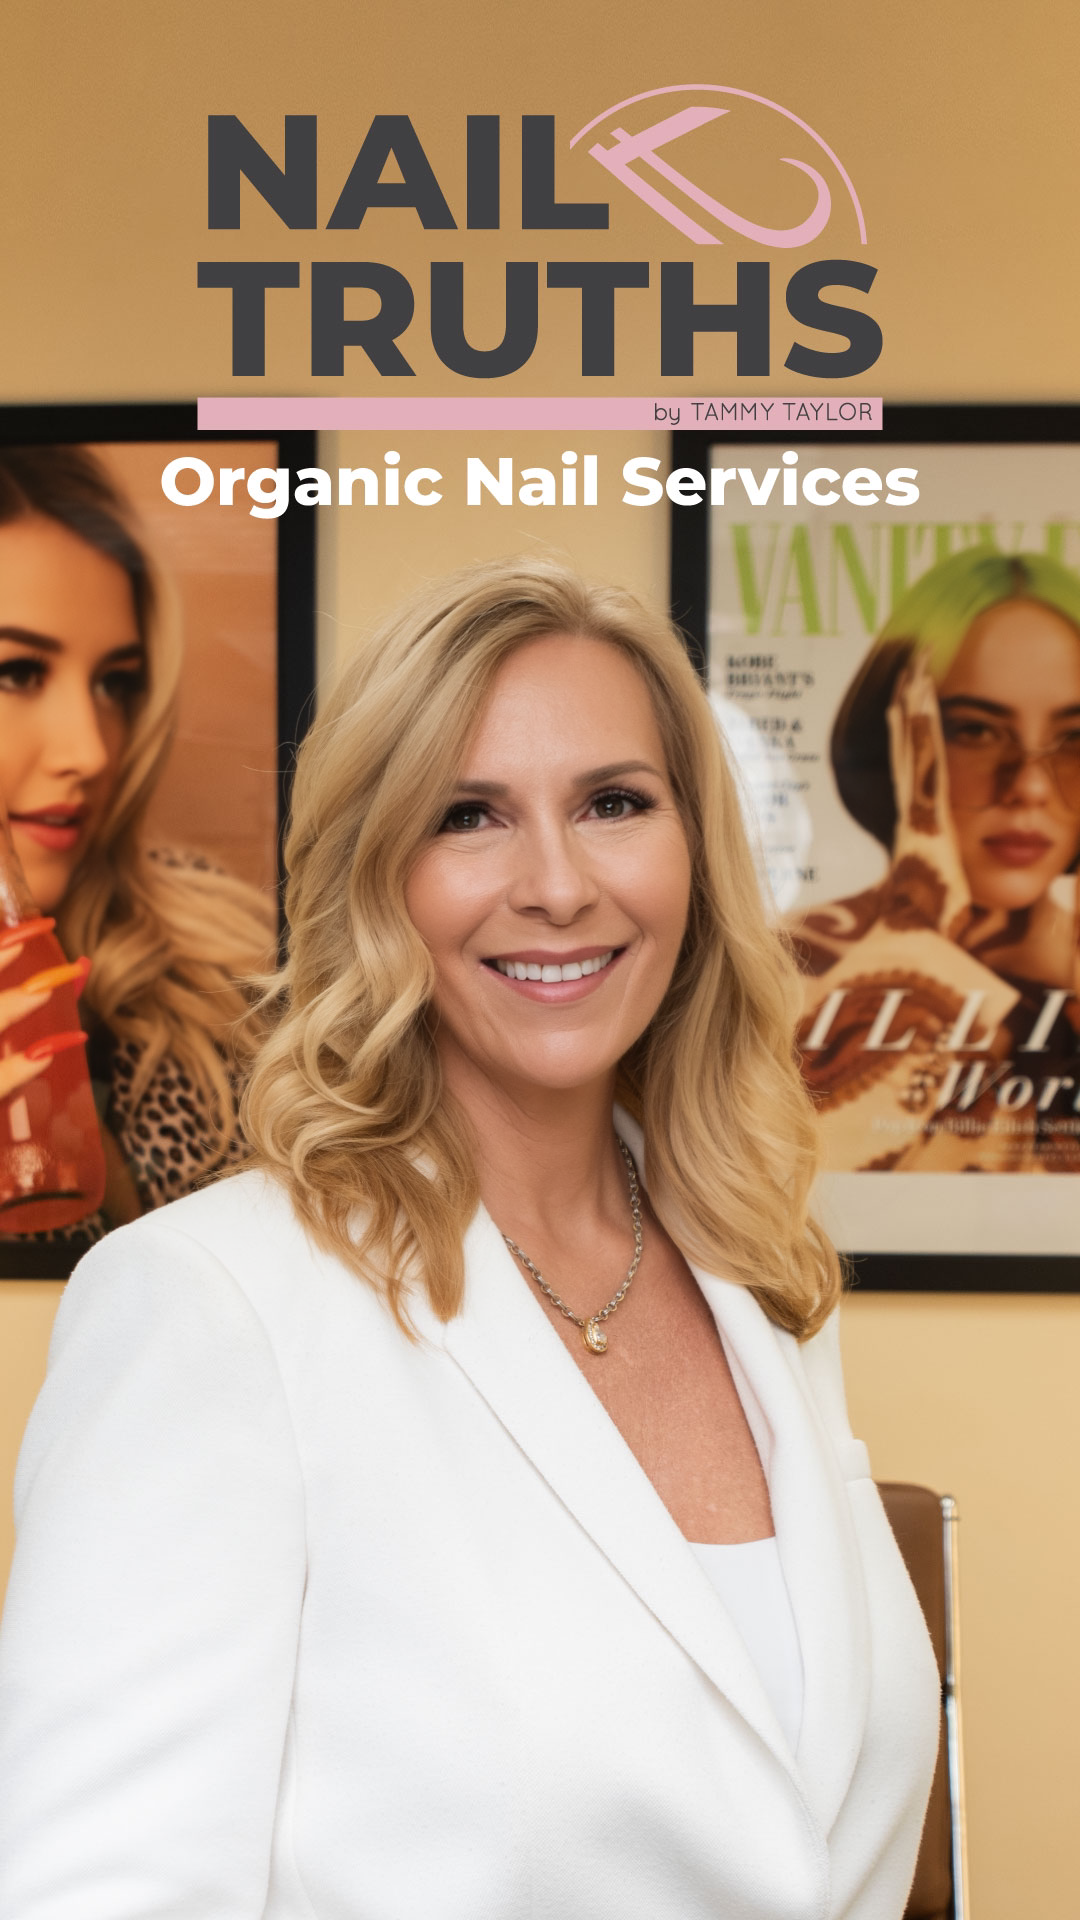 NAIL TRUTHS: Organic Nail Servies